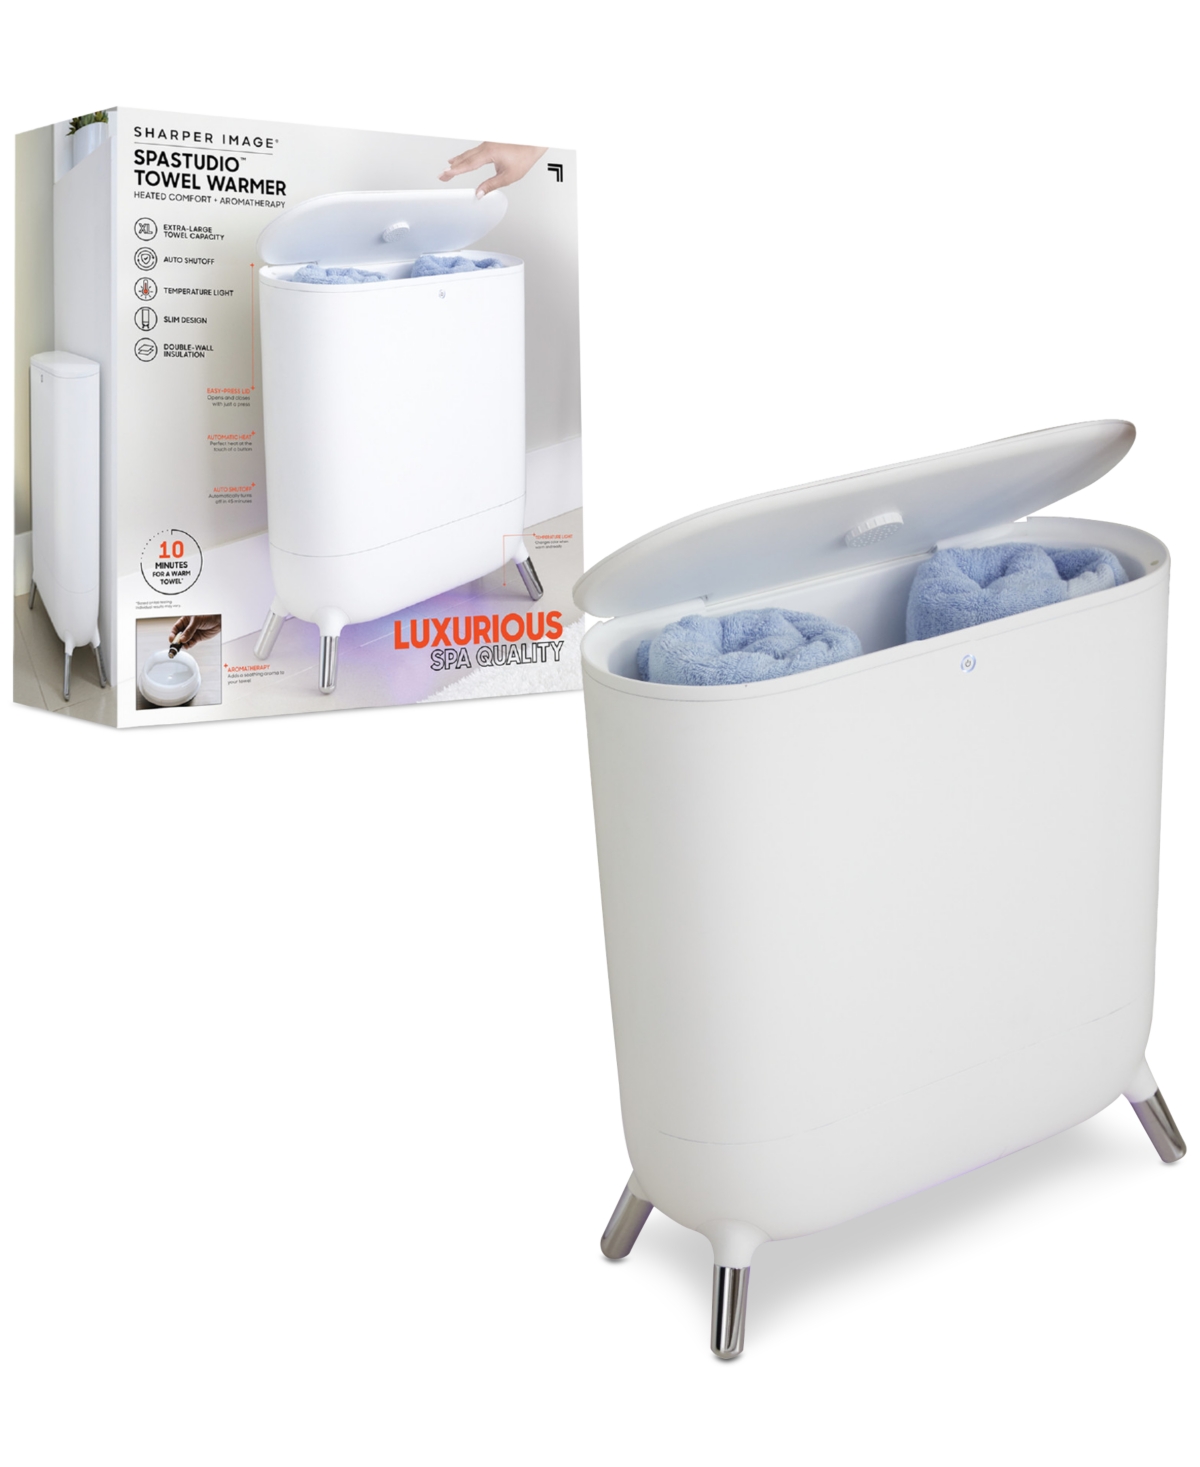 Sharper Image Spastudio Automatic Towel Warmer In White